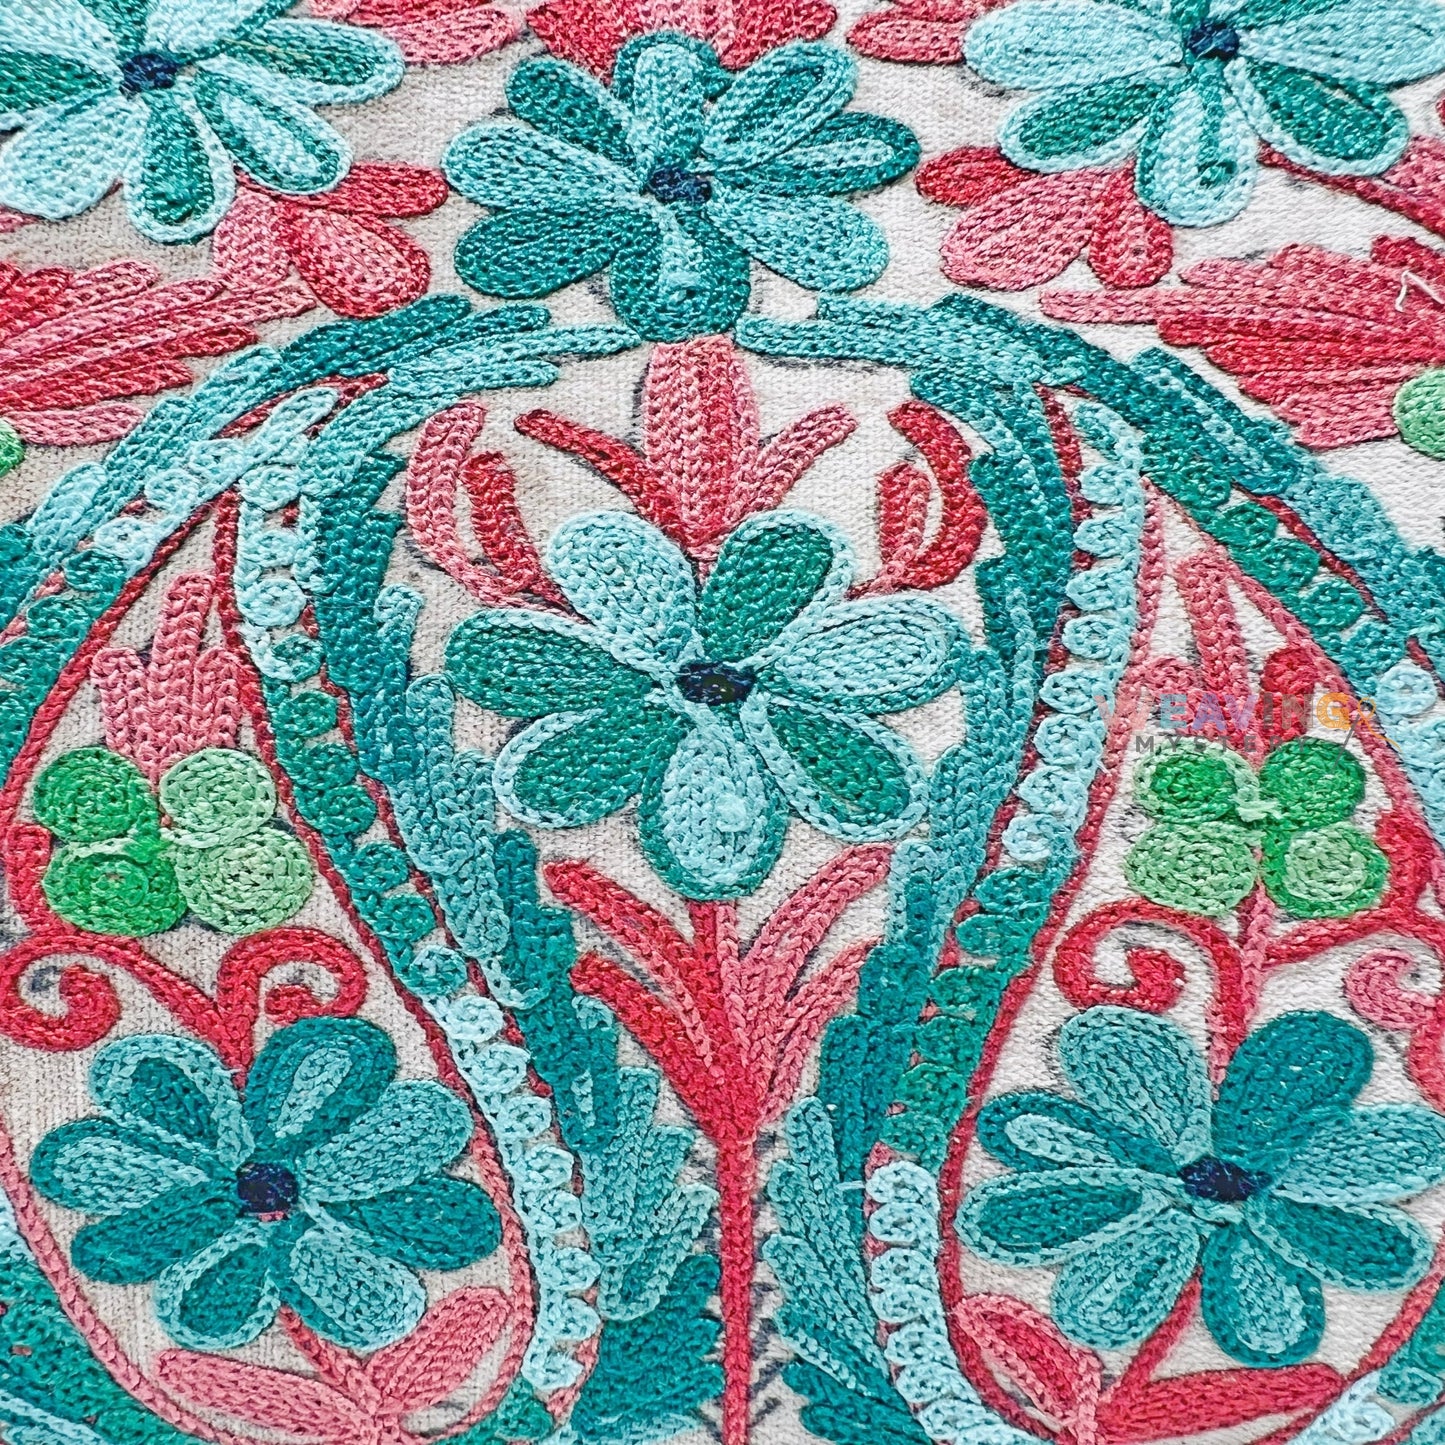 Blissful Burgundy Blooms: Elegant Embroidered Handbag